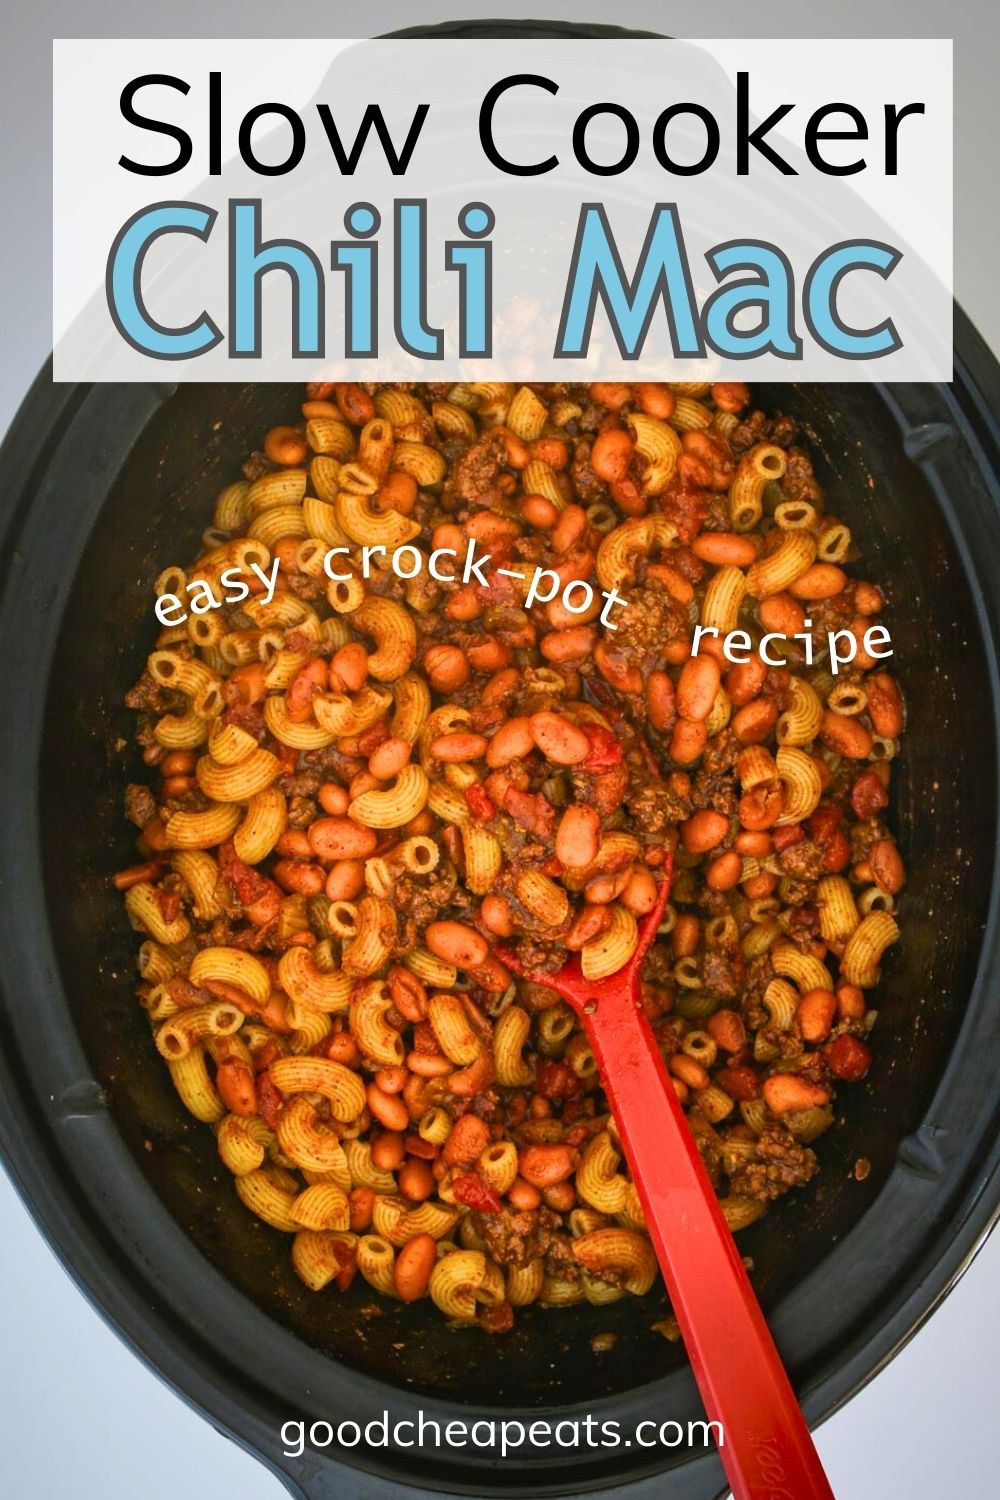 Slow Cooker Chili Mac Recipe - Good Cheap Eats